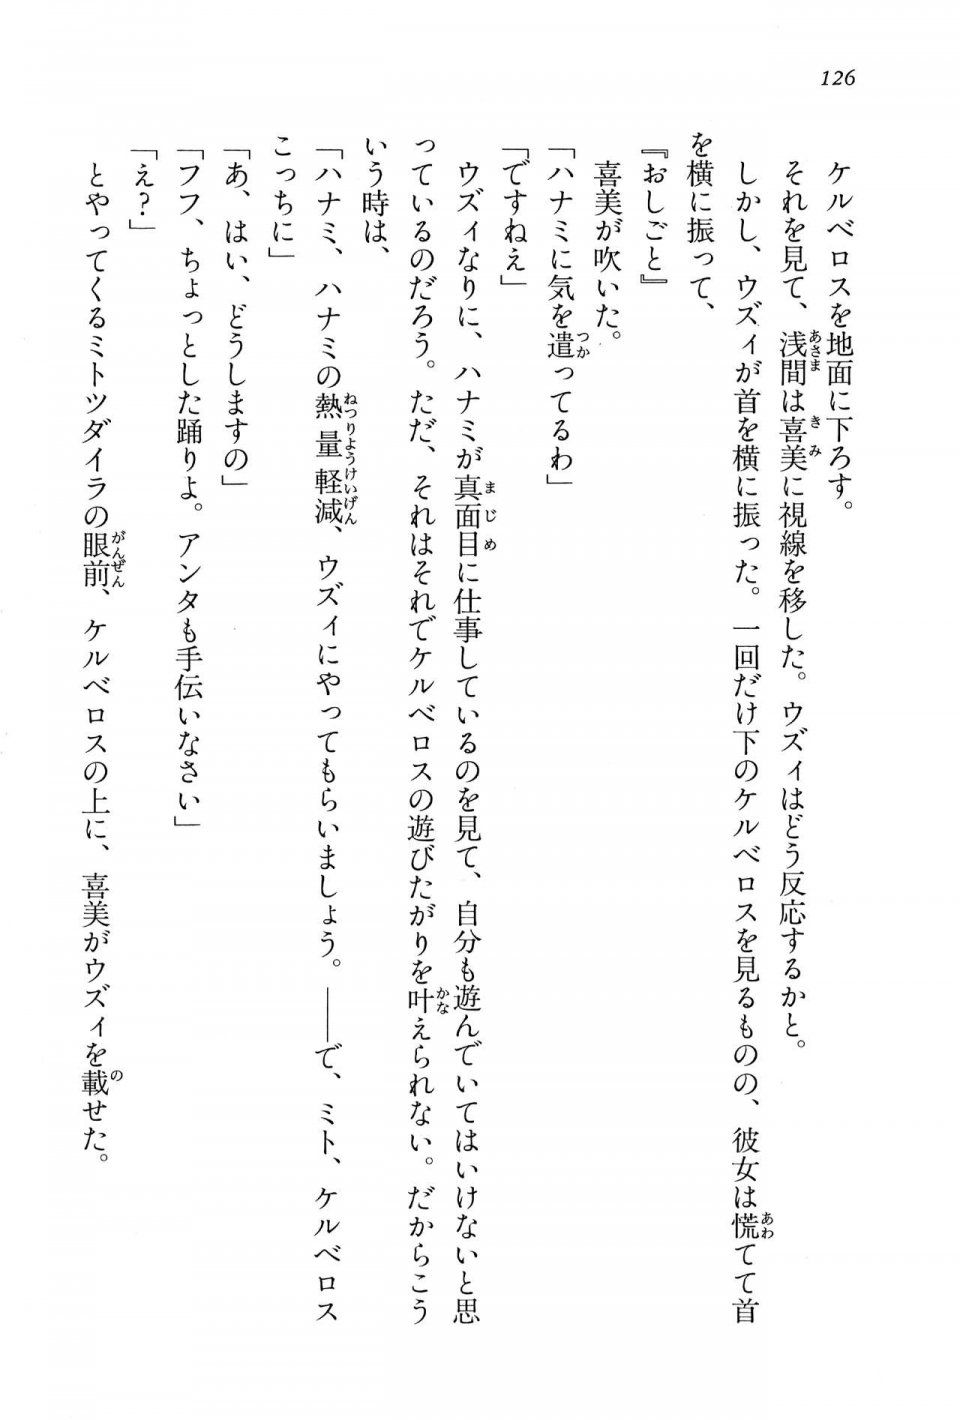 Kyoukai Senjou no Horizon BD Special Mininovel Vol 6(3B) - Photo #130